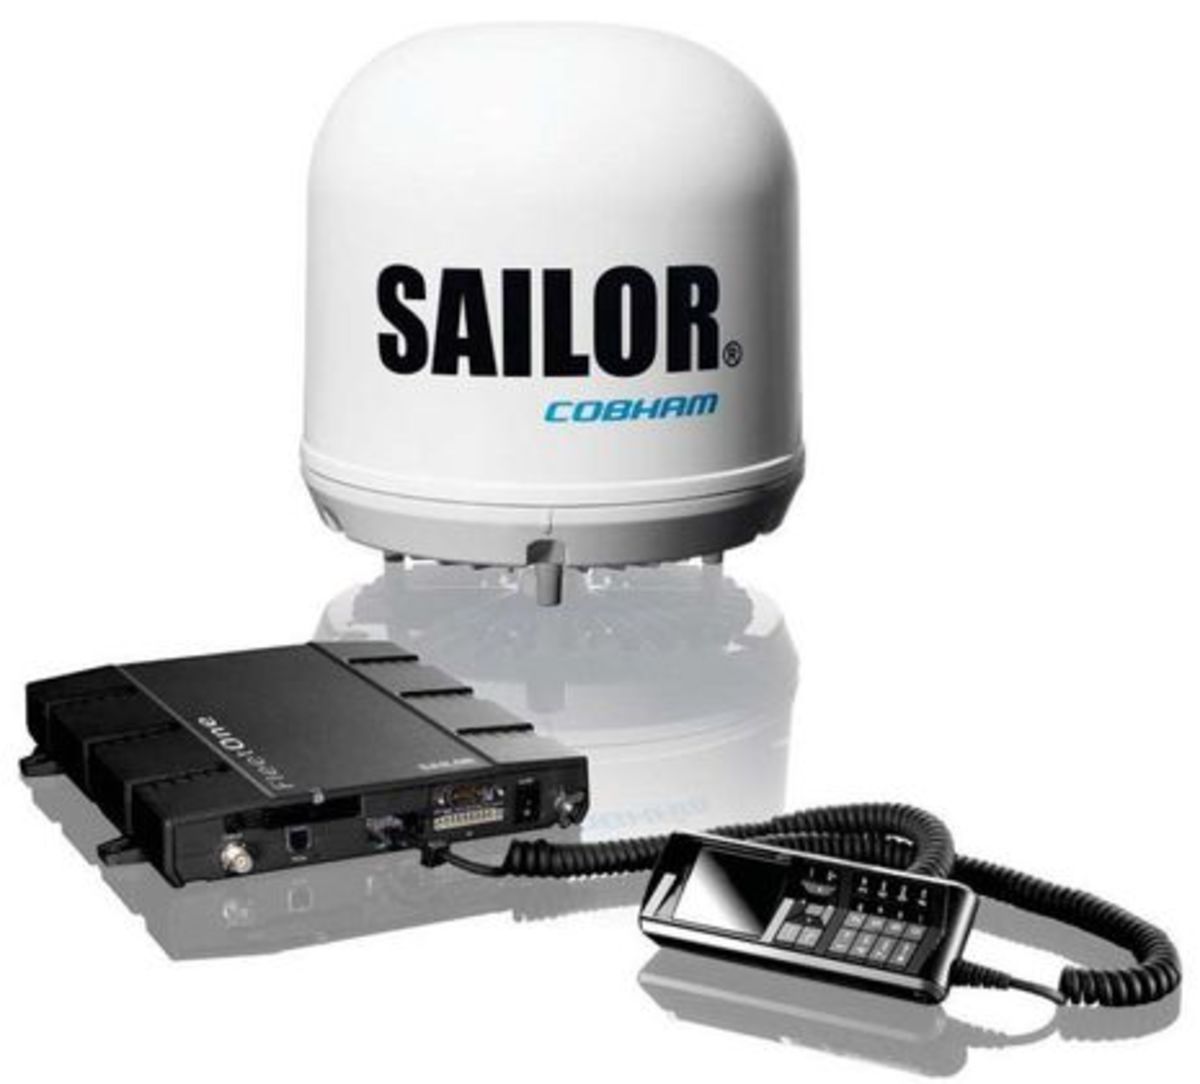 Sailor_Inmarsat_Fleet_One_system_aPanbo-thumb-465xauto-9488